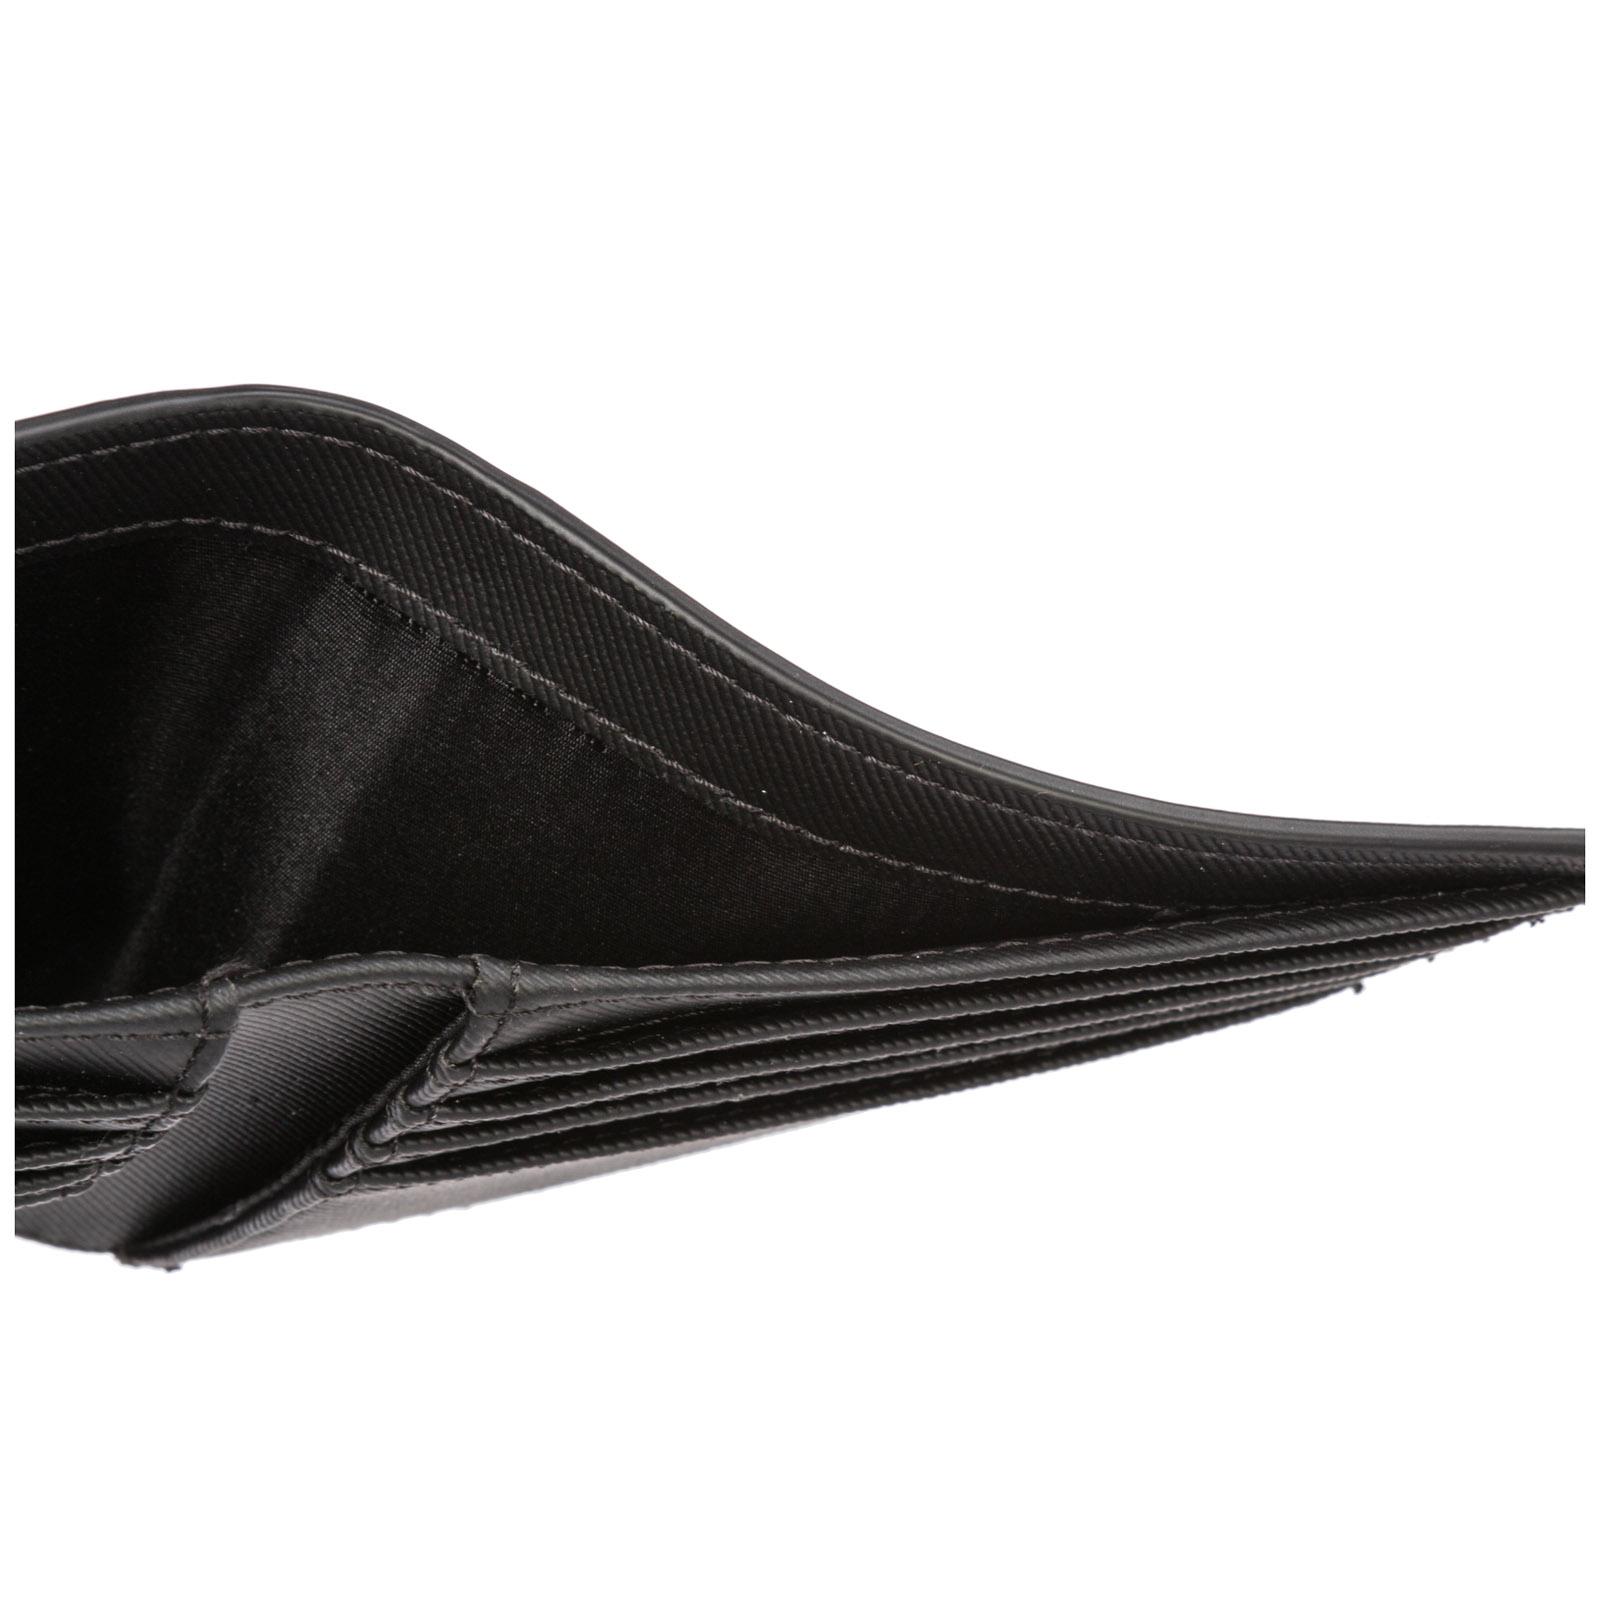 Emporio Armani Wallet Credit Card Bifold in Black for Men - Lyst